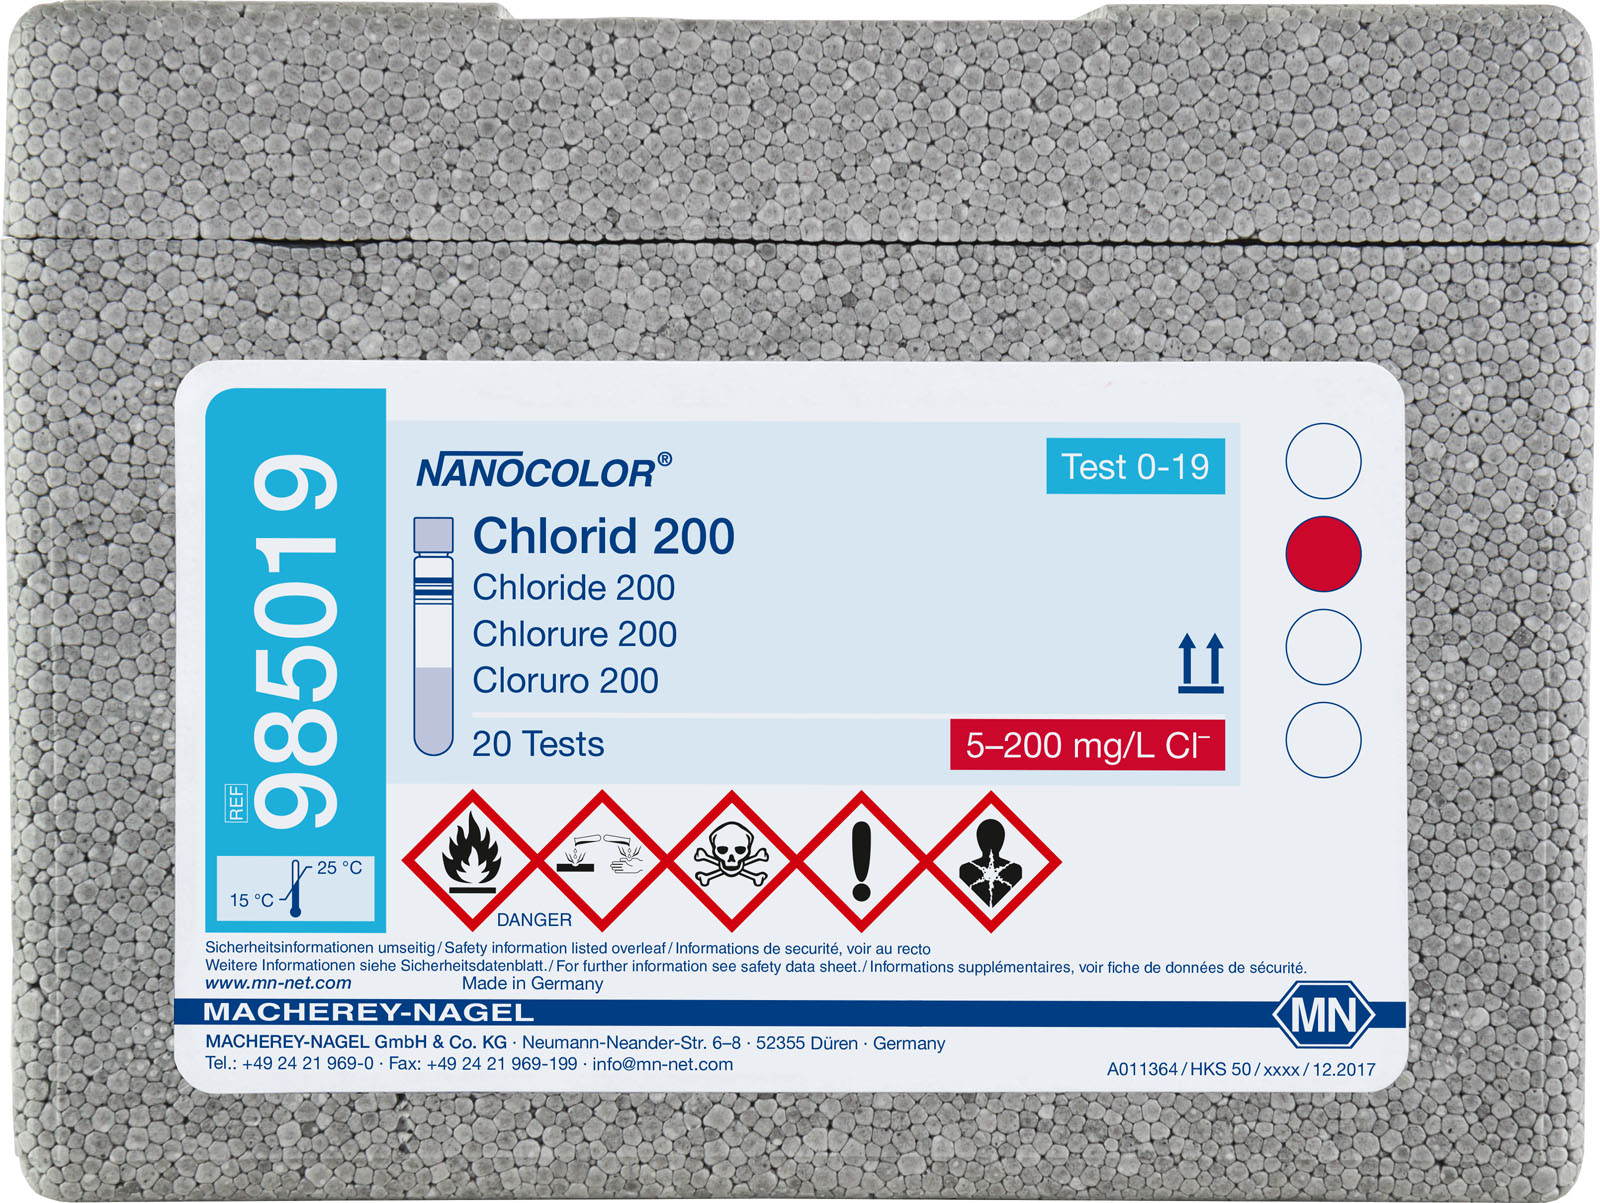 RUK NANOCOLOR-Chlorid 200 Test